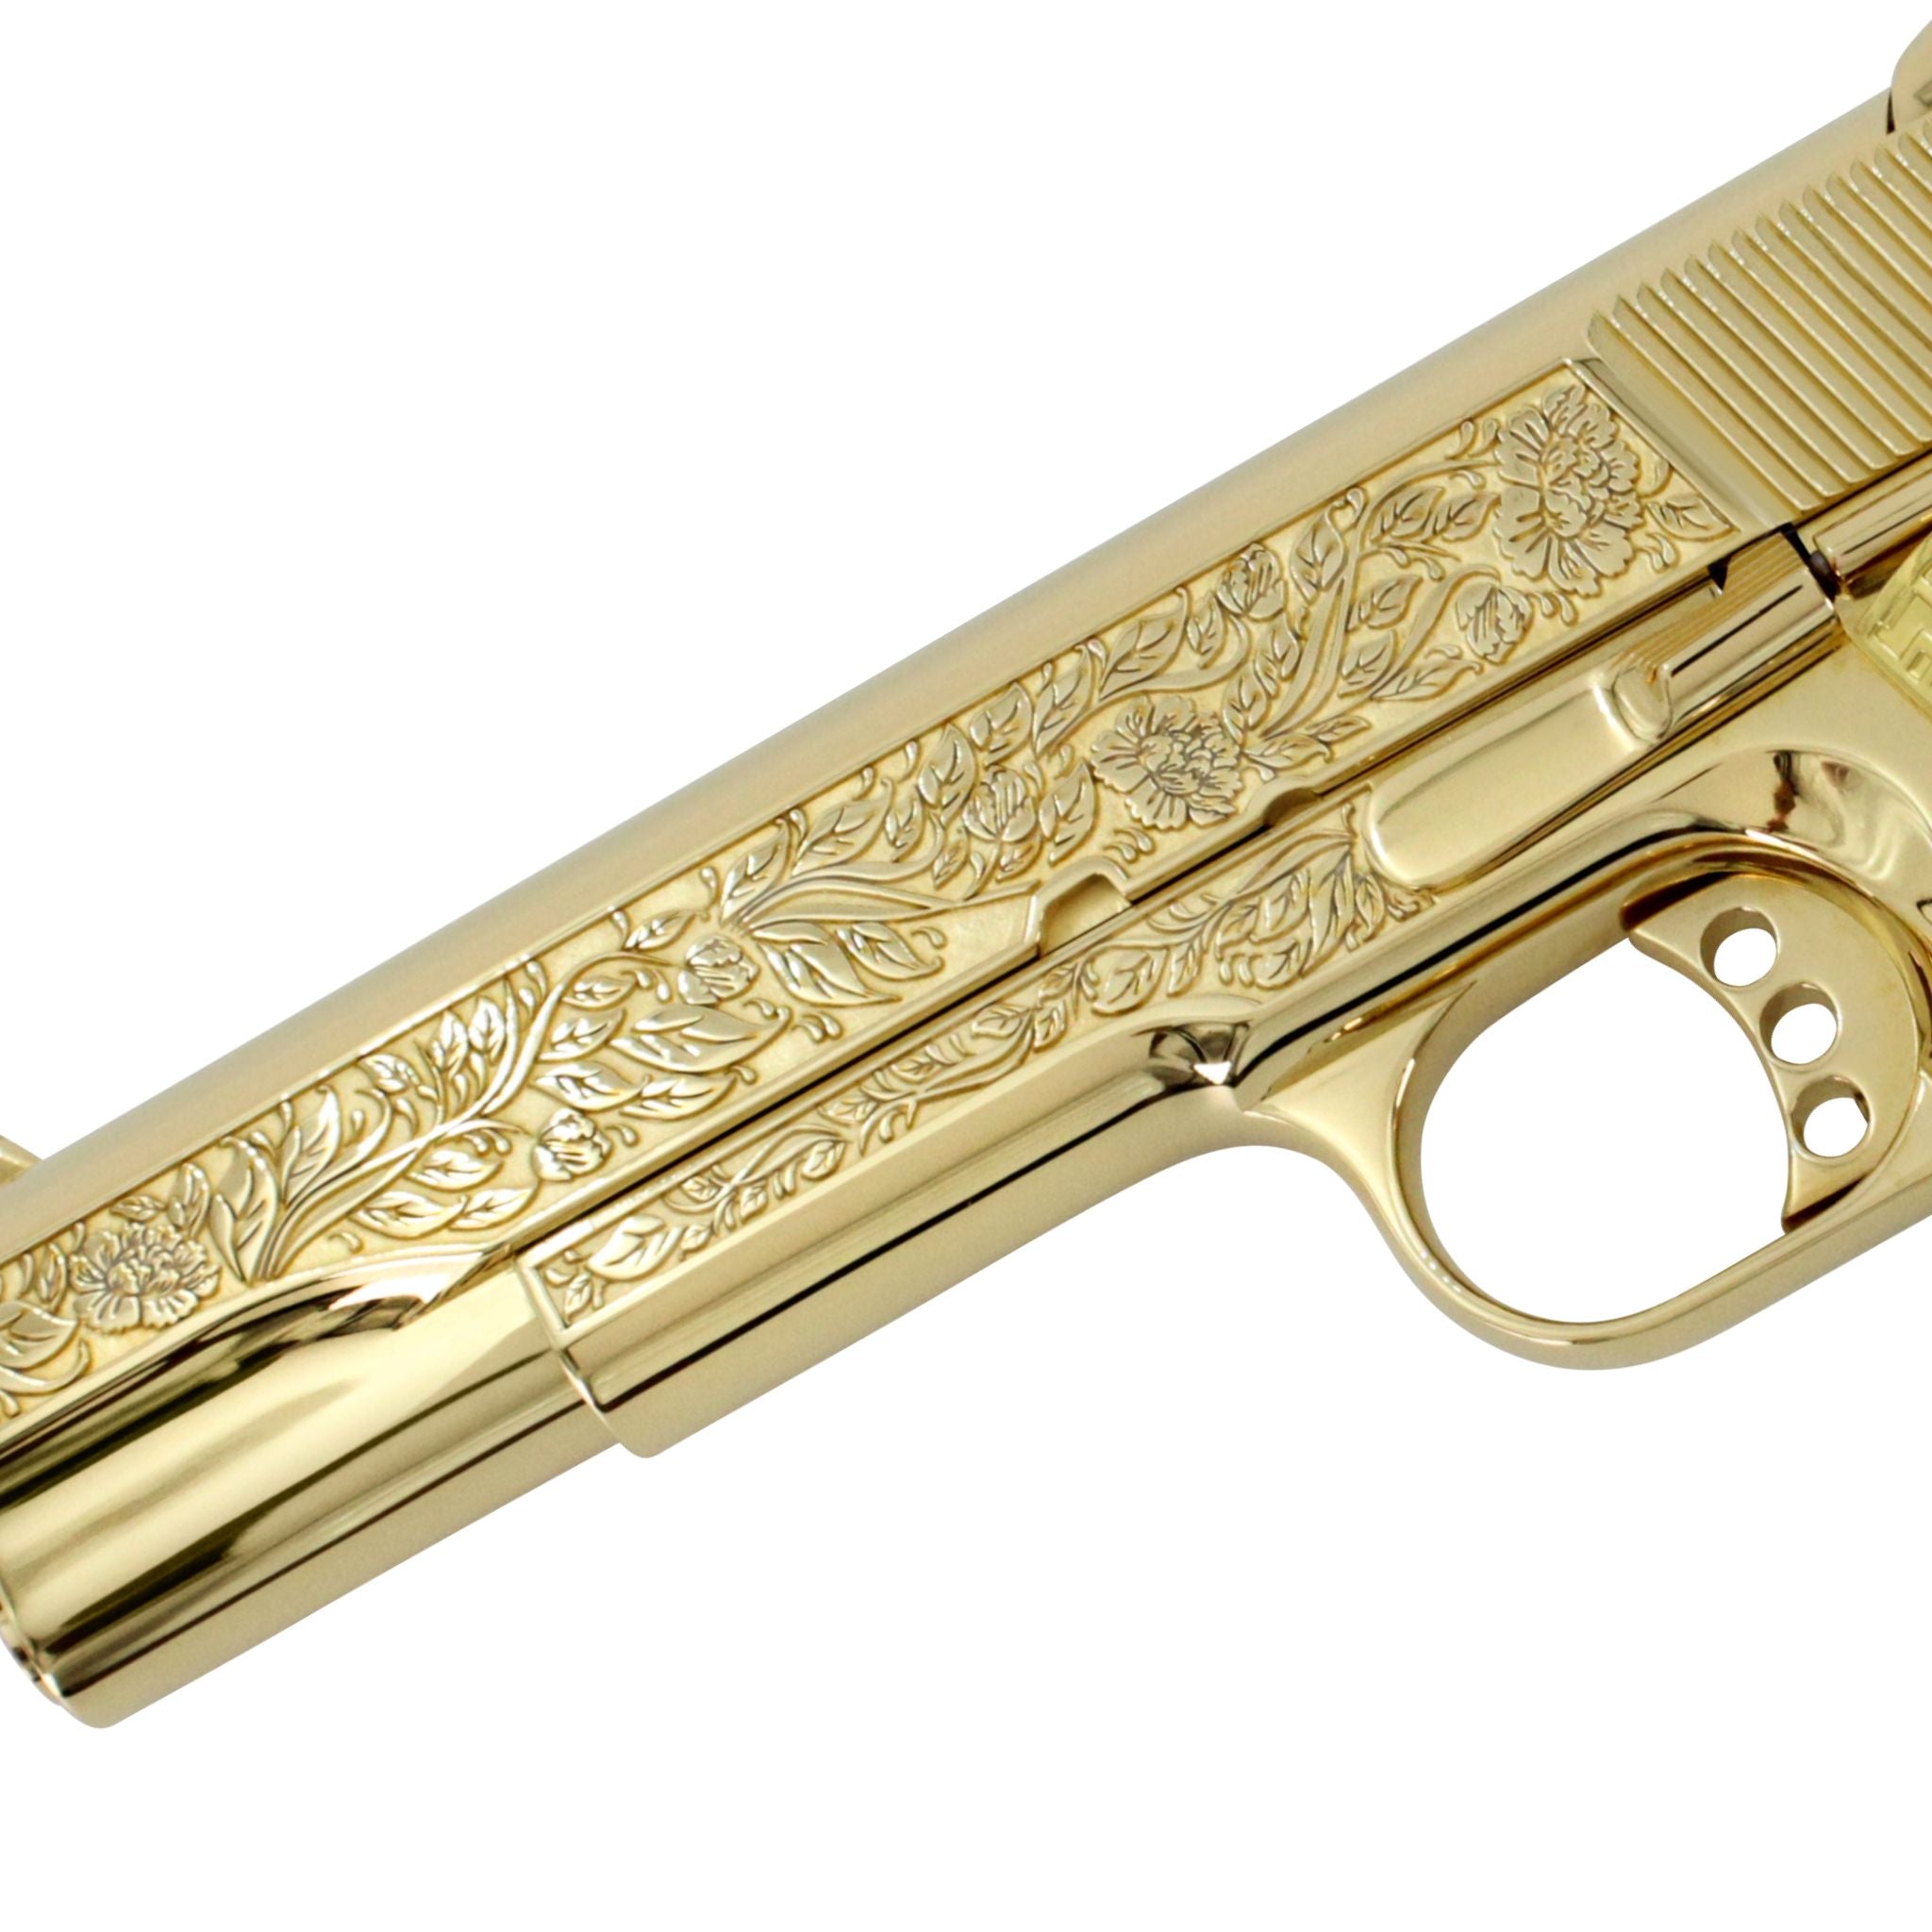 Springfield Armory Garrison 1911, 45 ACP, Italian Renaissance, 24kt Gold, SKU: 6712956747878, 24 karat gold gun, 24 Karat Gold Firearm